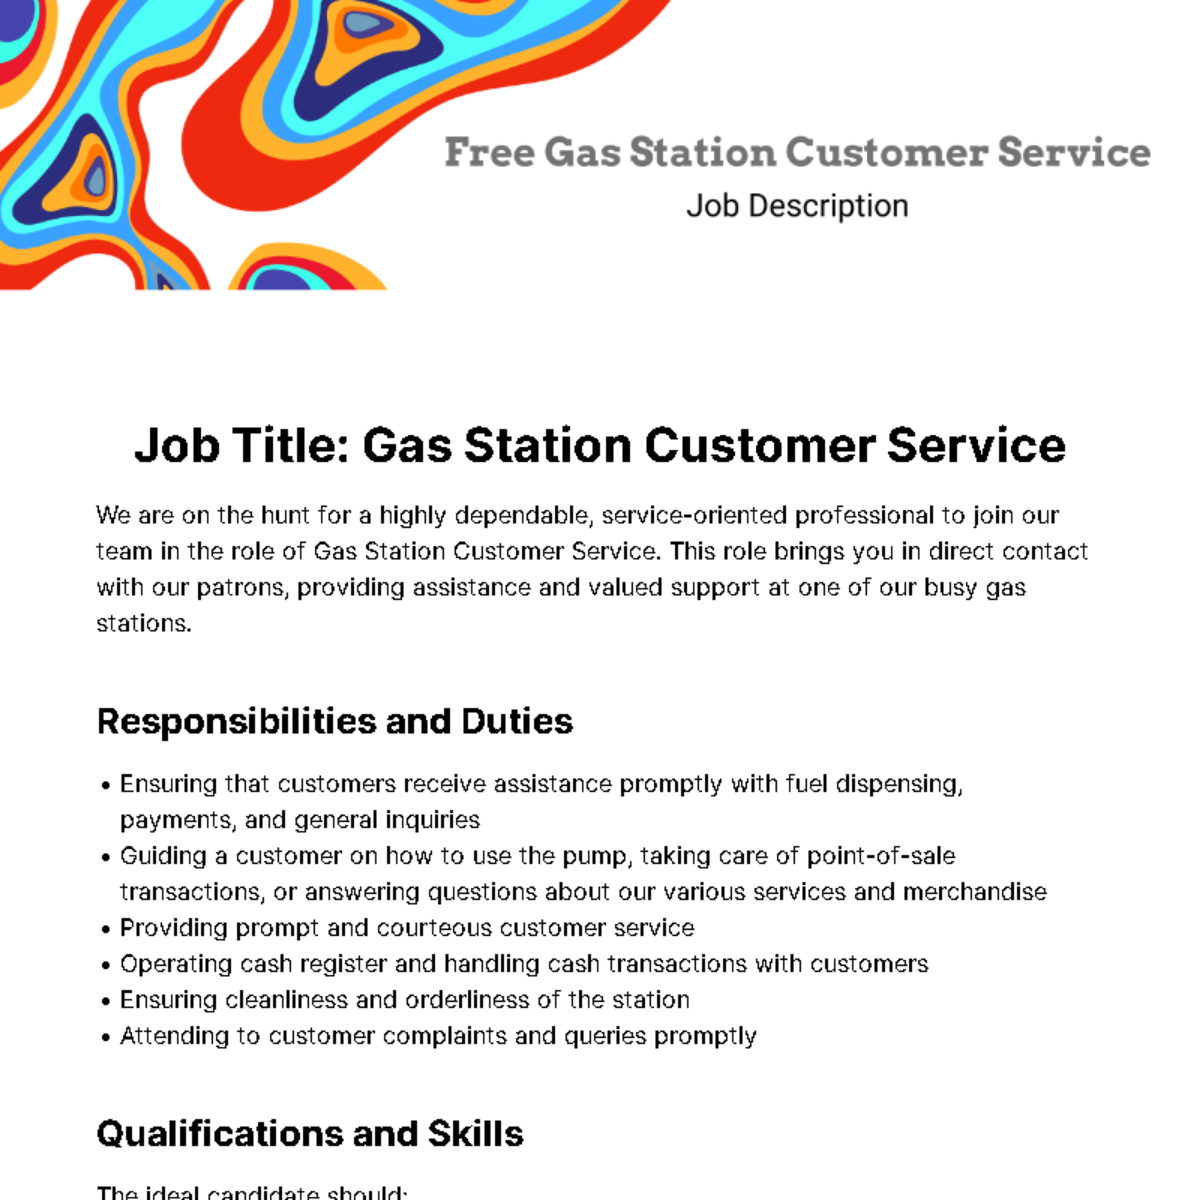 Gas Station Customer Service Job Description Template